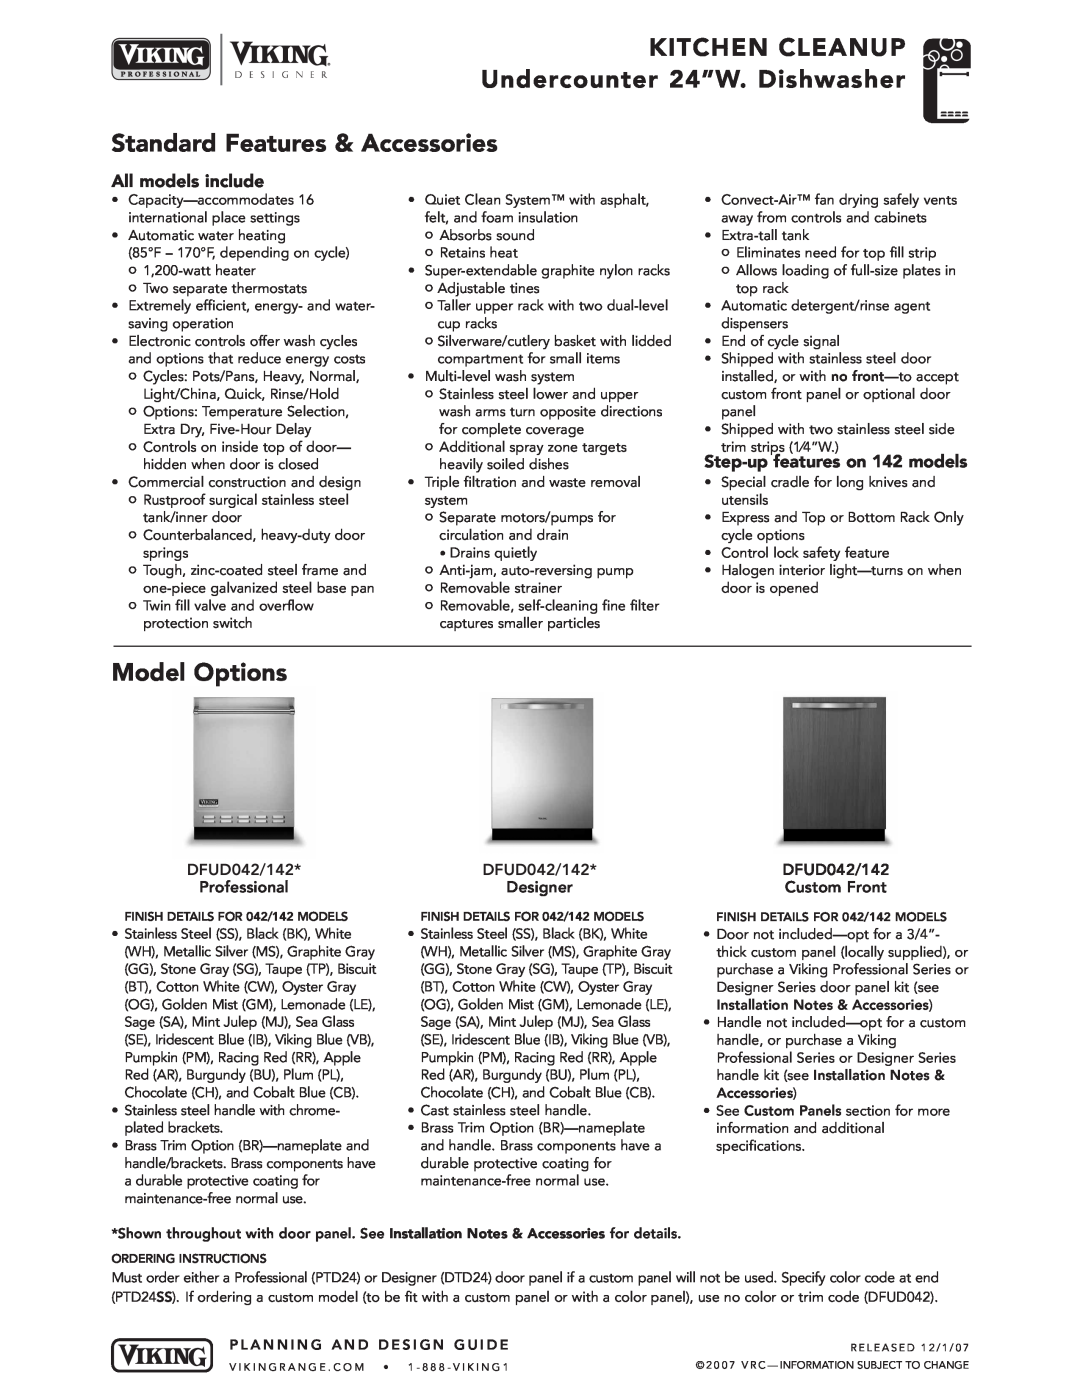 Viking DFUD042/142* Designer specifications KITCHEN CLEANUP Undercounter 24”W. Dishwasher, Standard Features & Accessories 